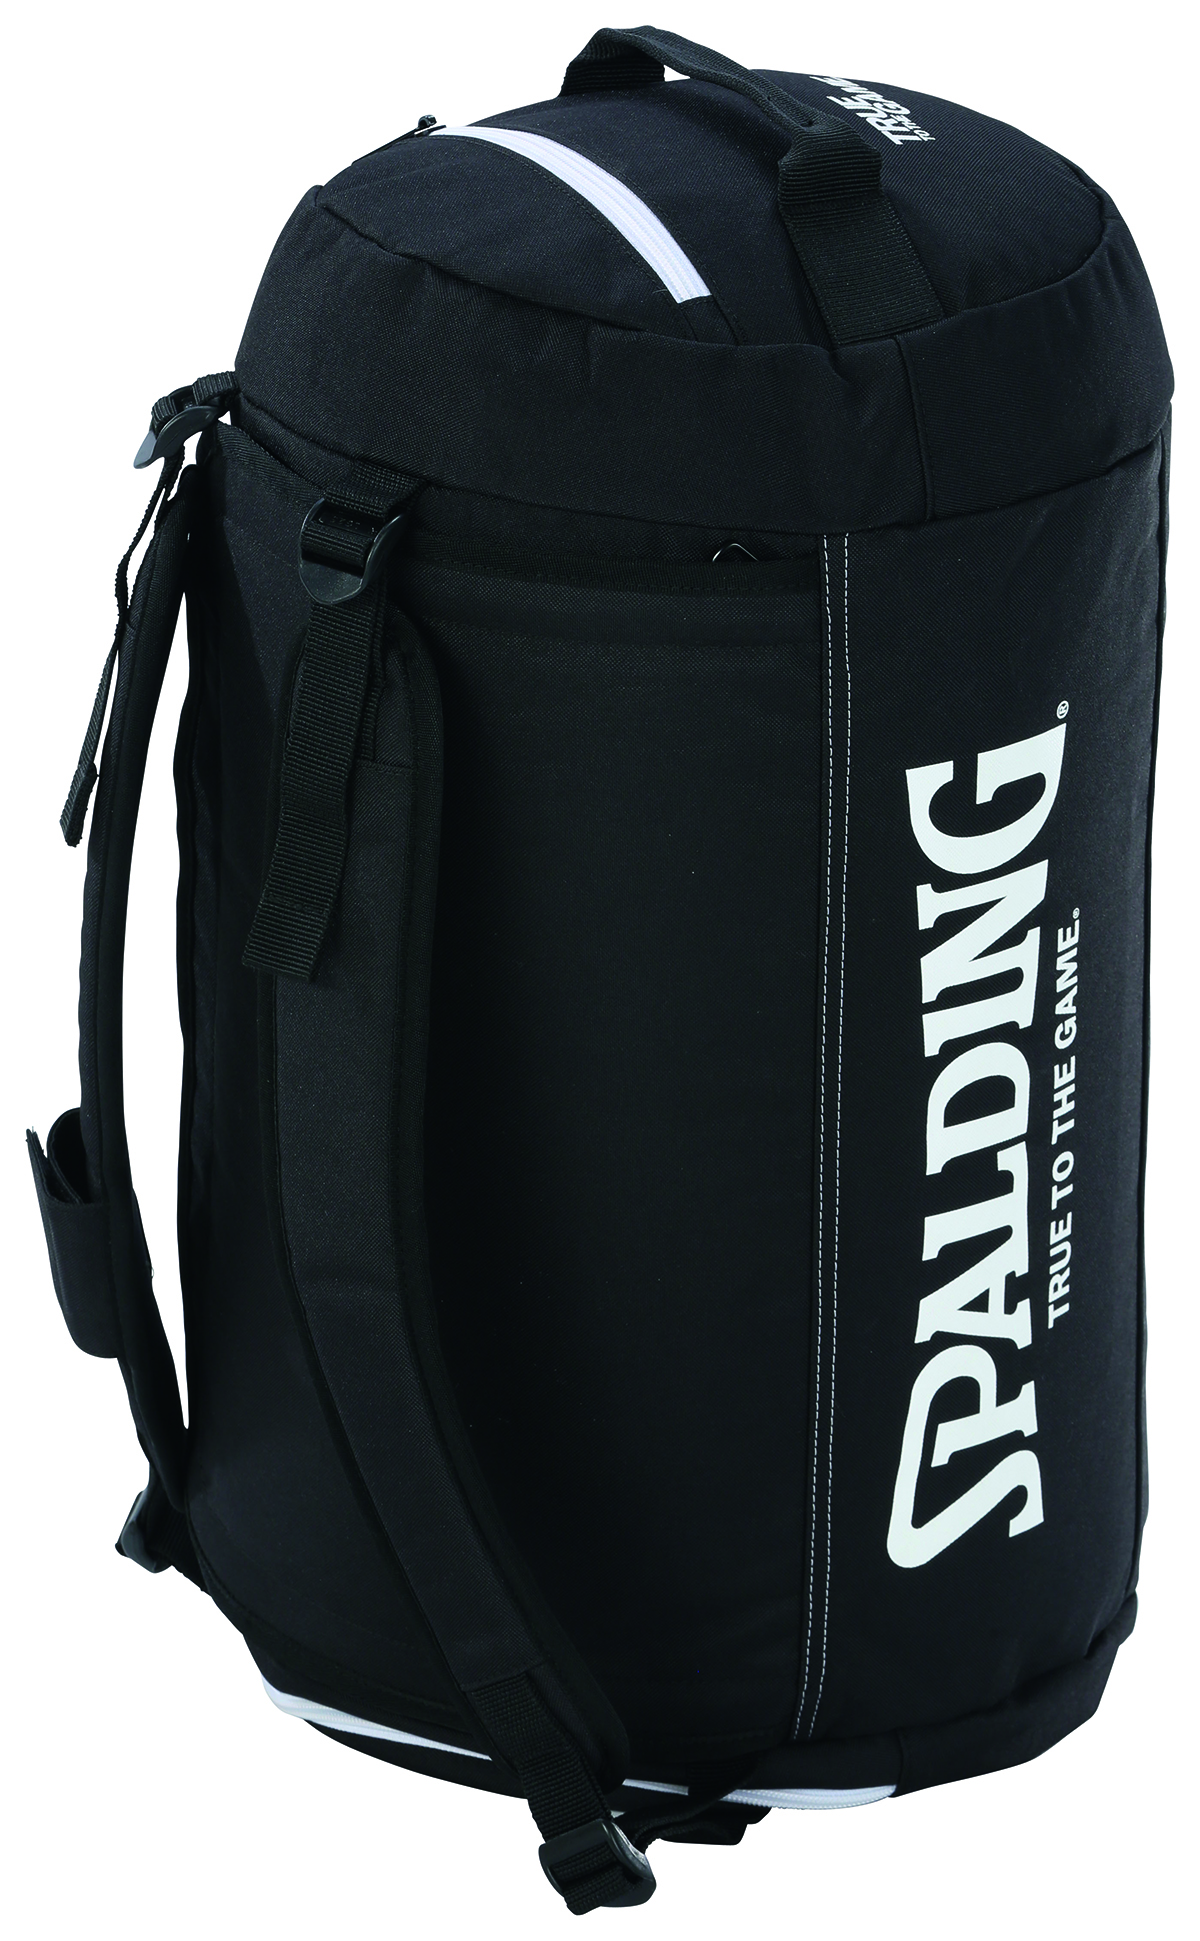 Spalding Duffle Bag Sporttasche Rucksack 40L